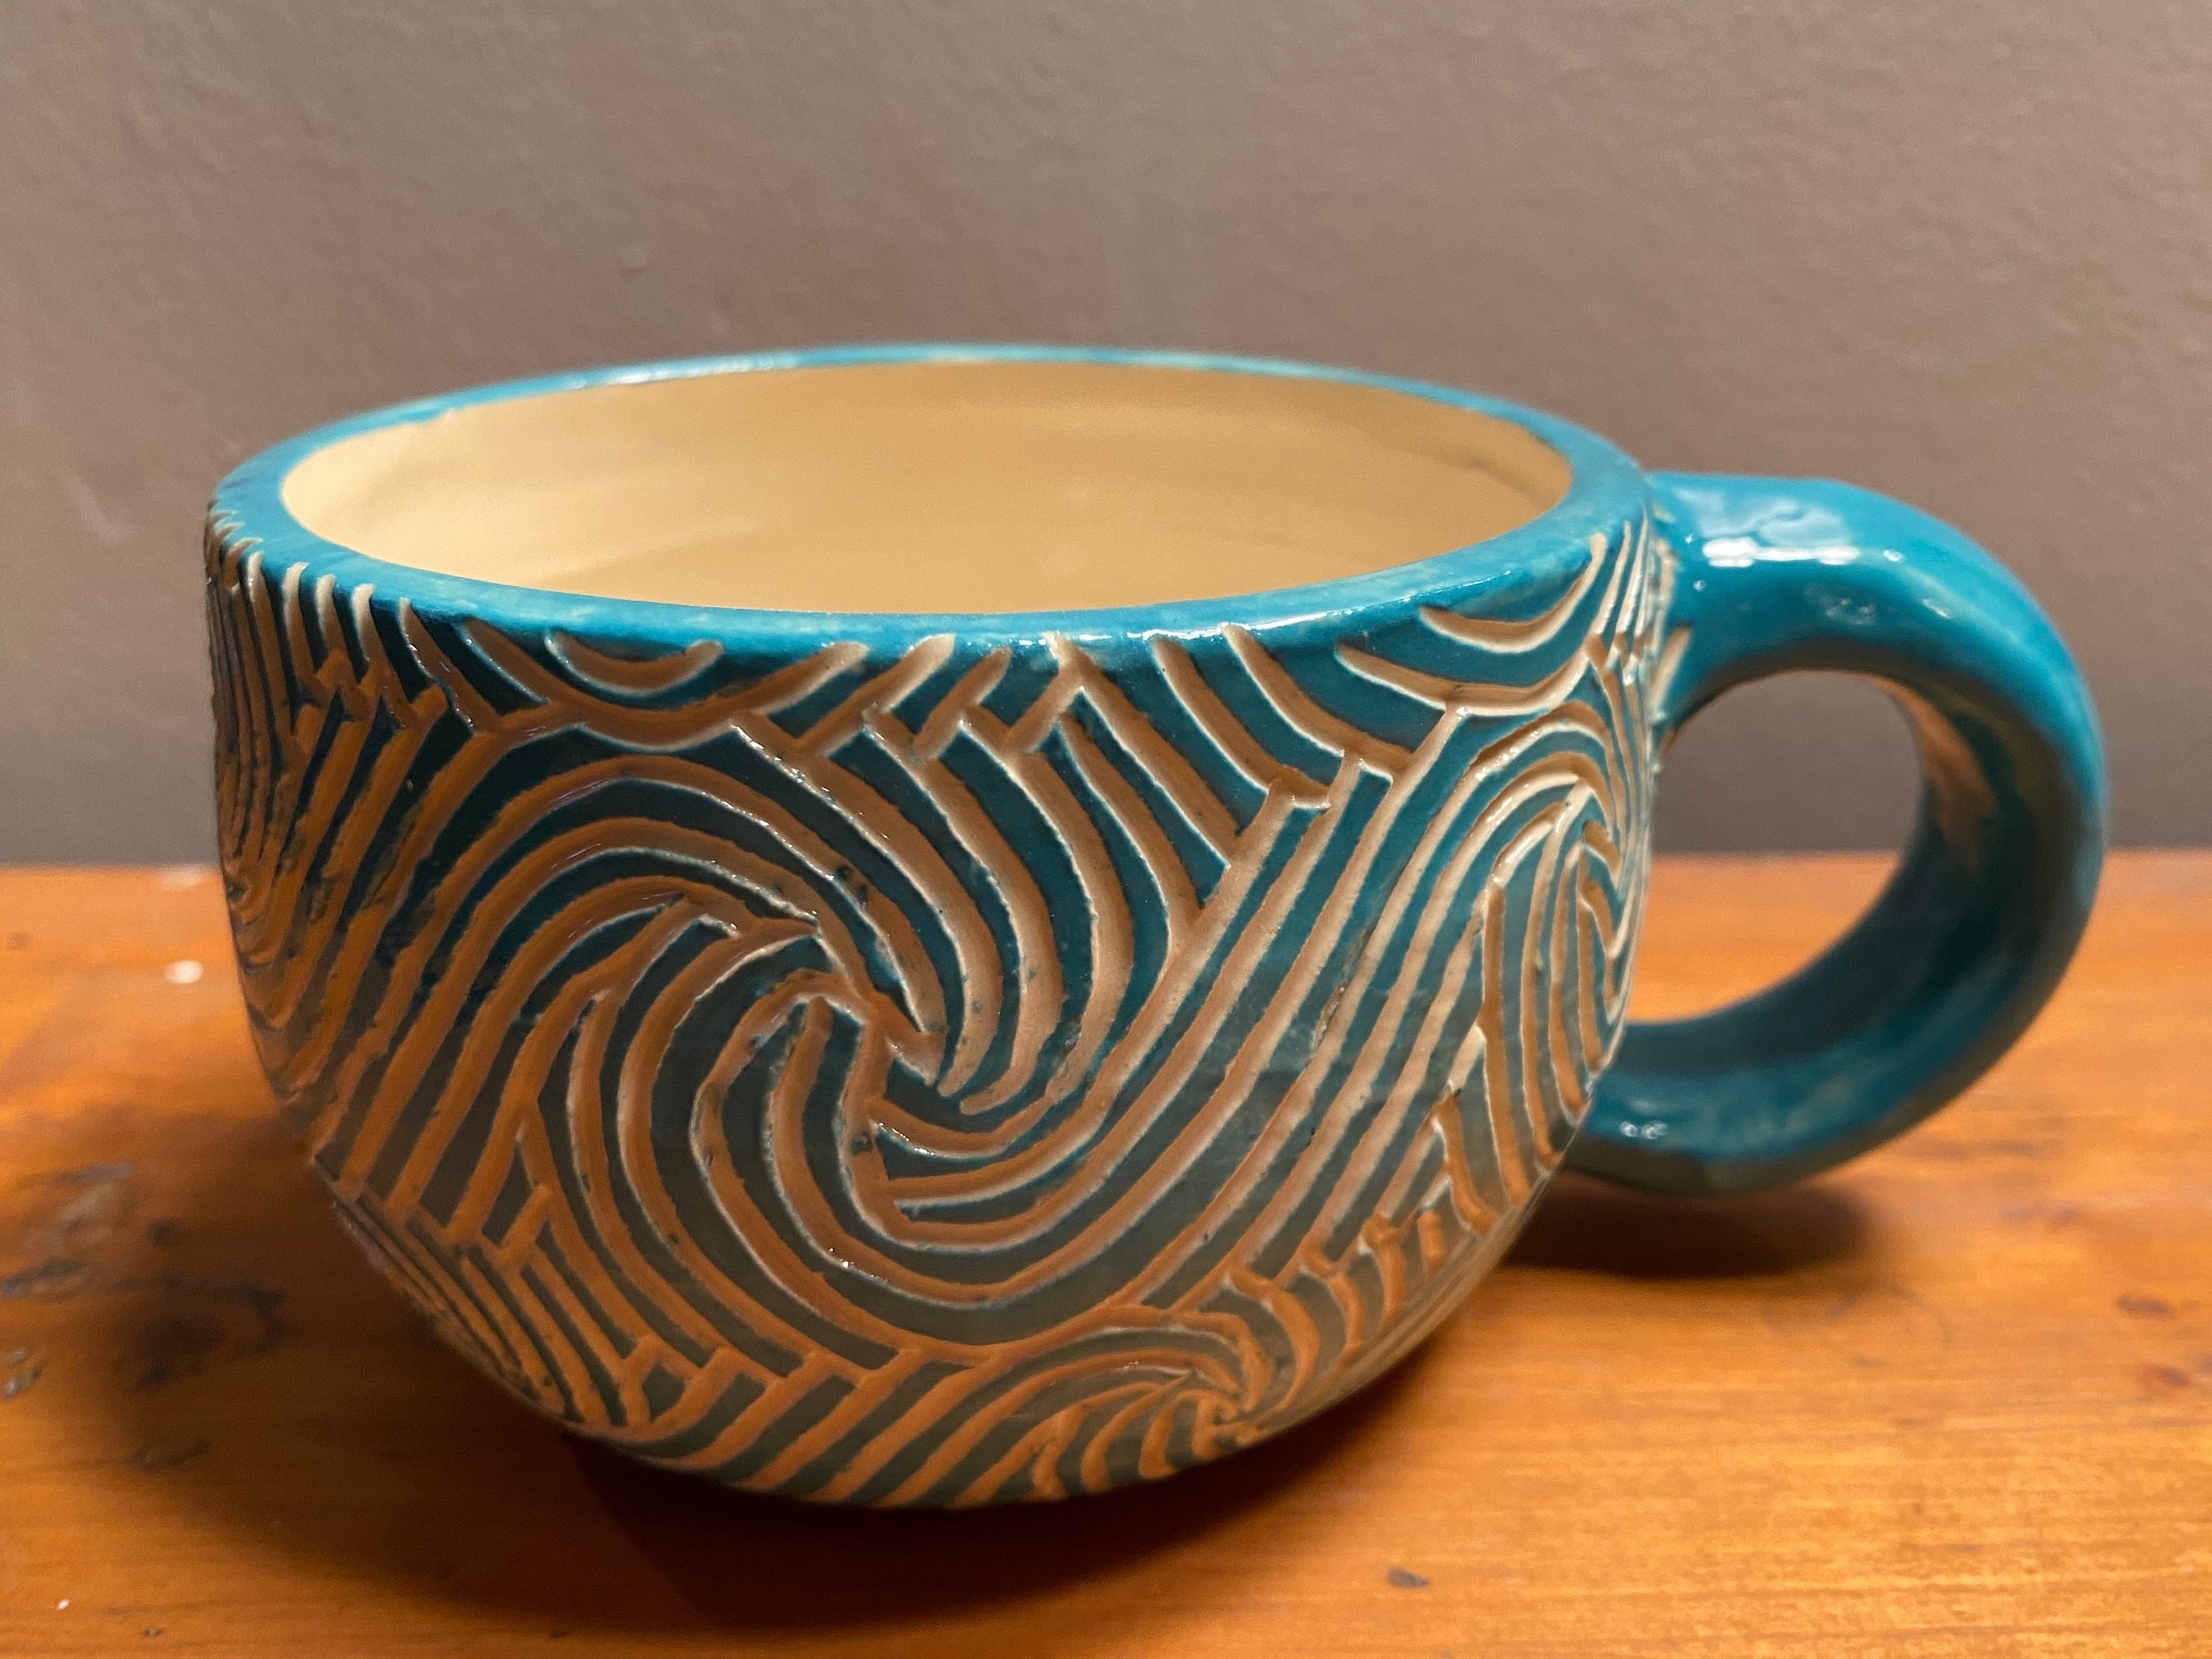 Abstract Ocean Waves Carved - Pottery Mug Etsy Handmade/hand